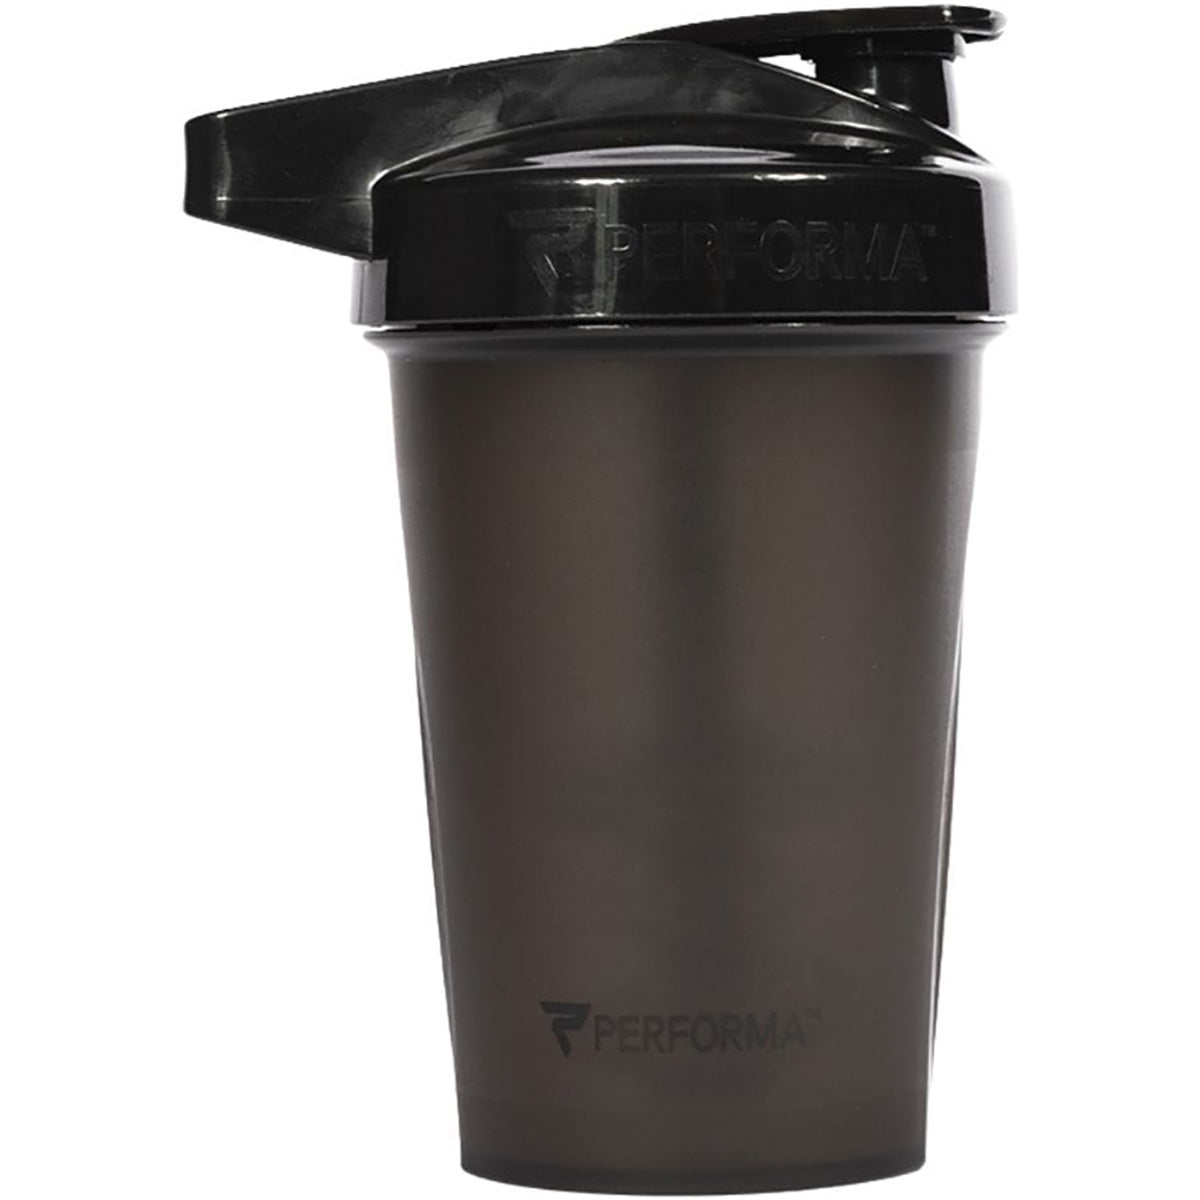 Performa Activ 20 oz. Leak-Free Shaker Cup Performa